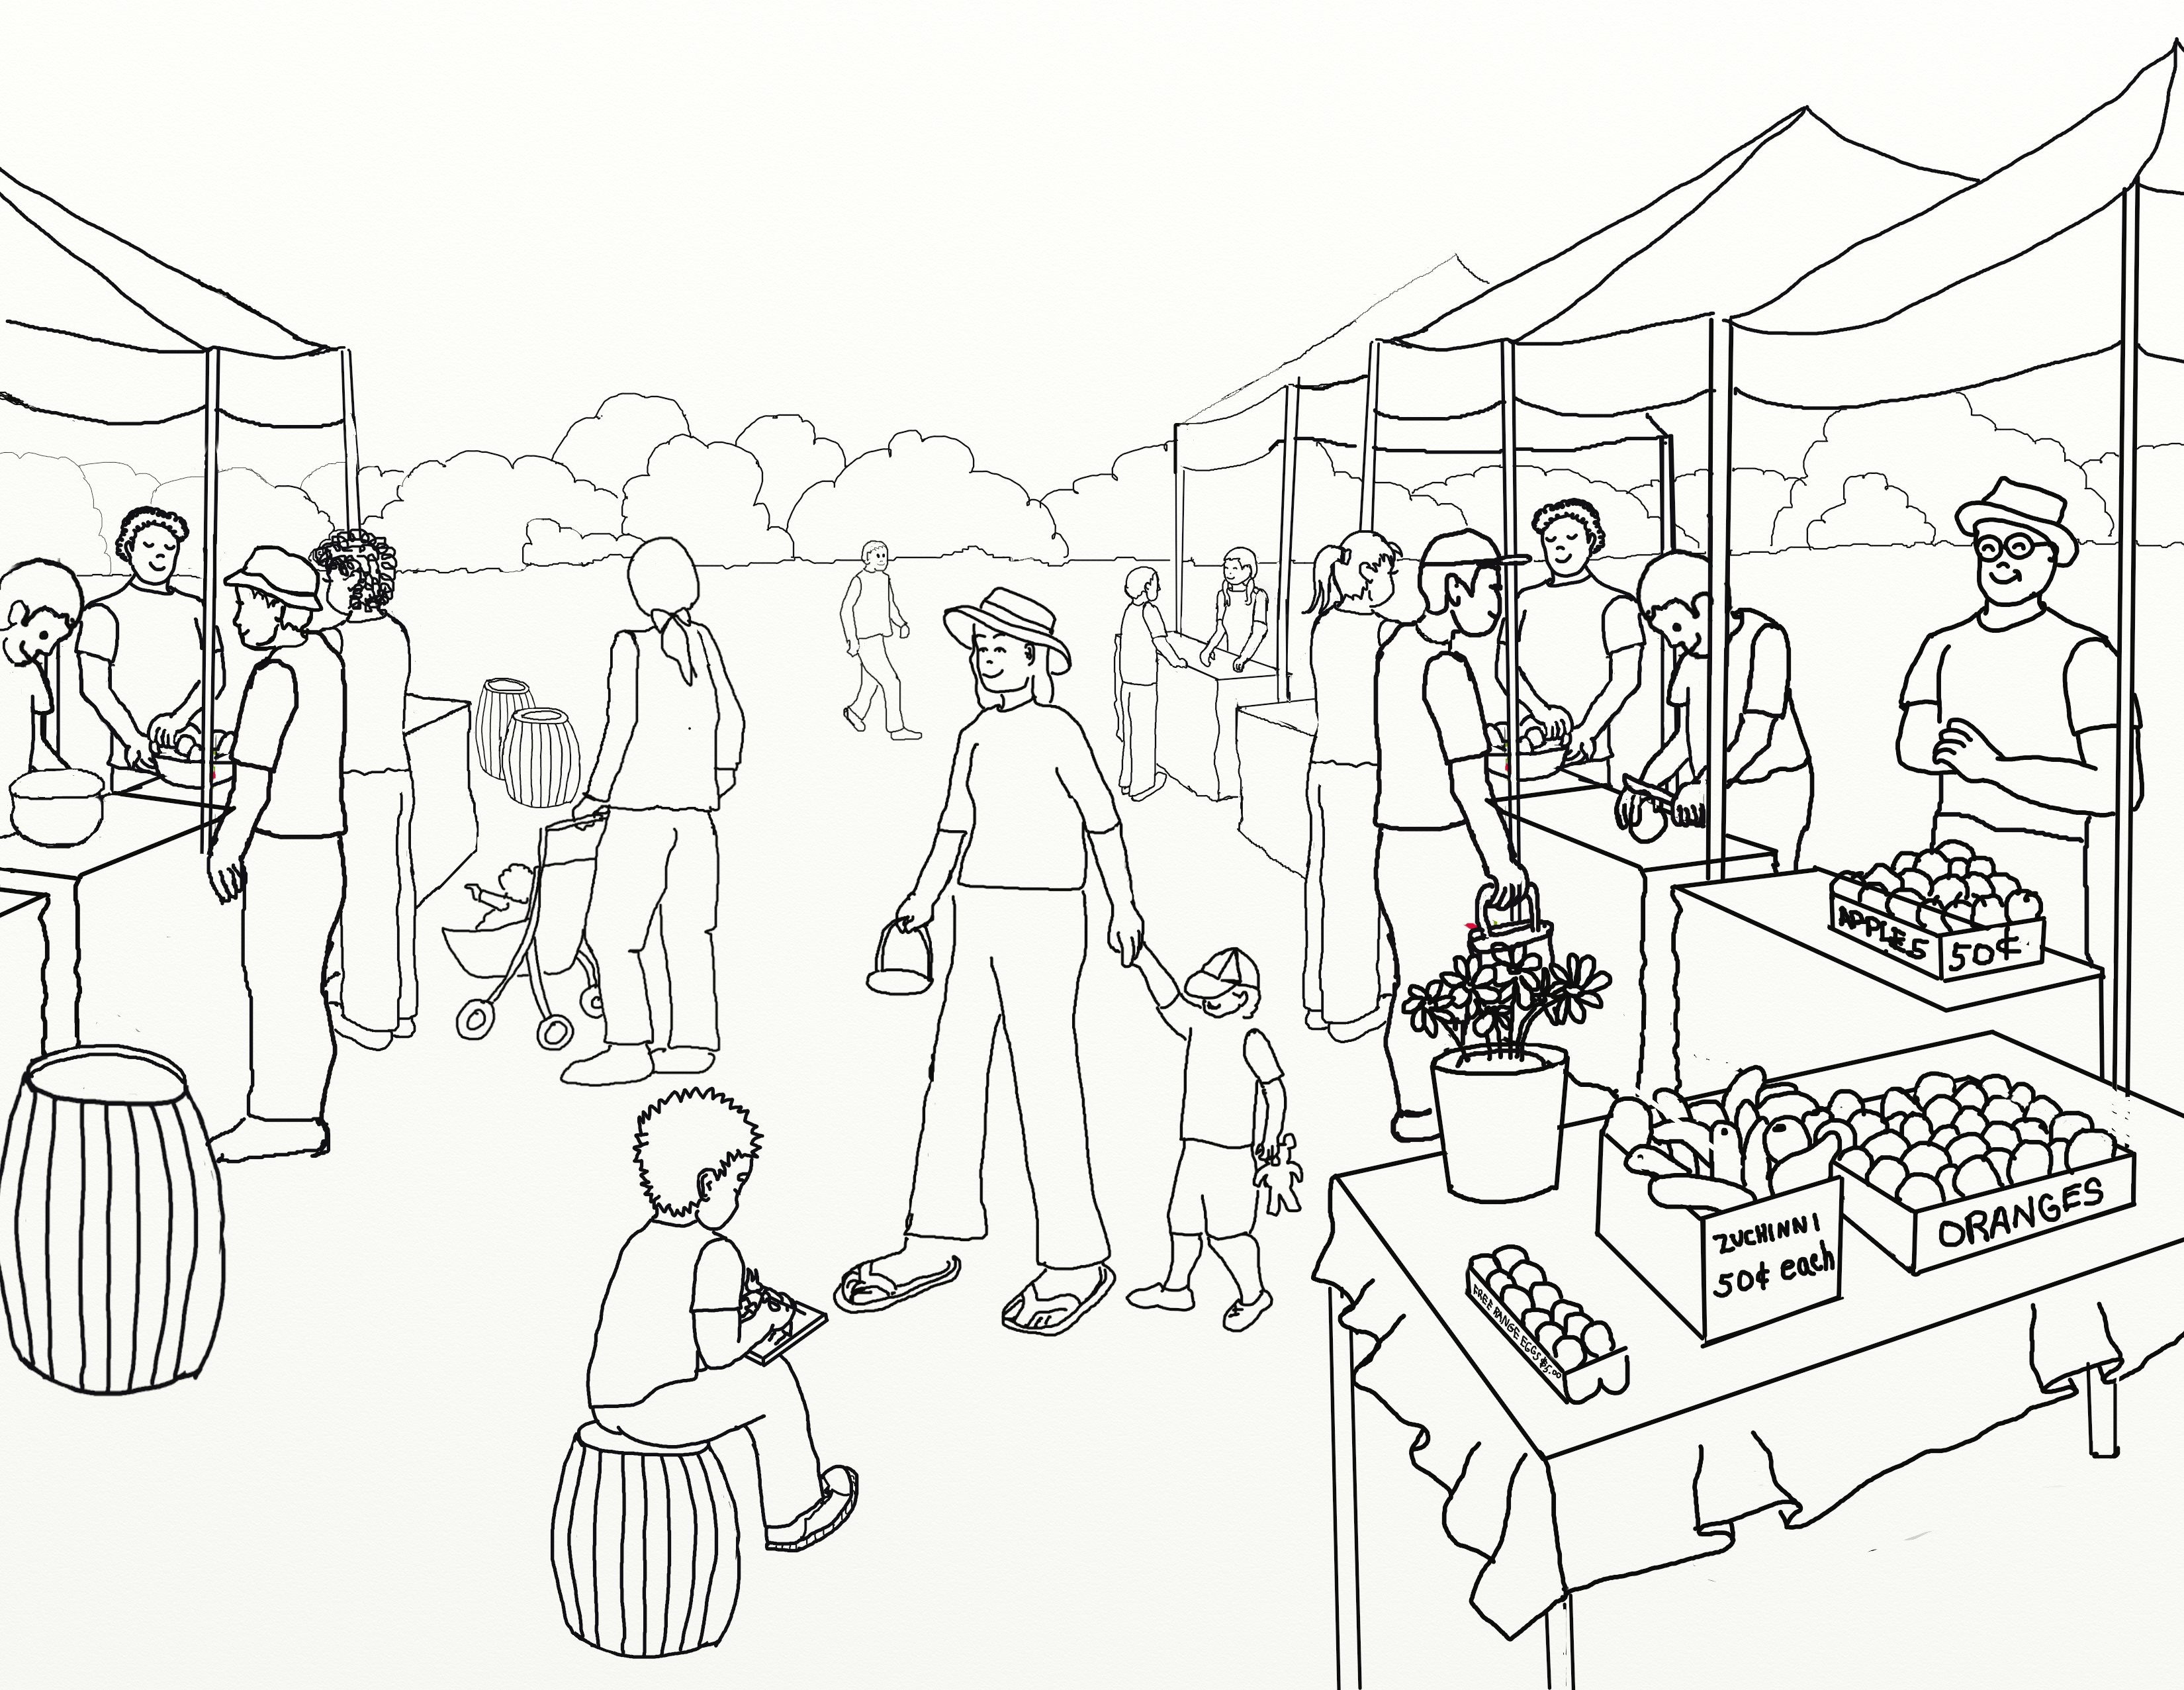 Simple Village Market Drawing Sketch for Adult